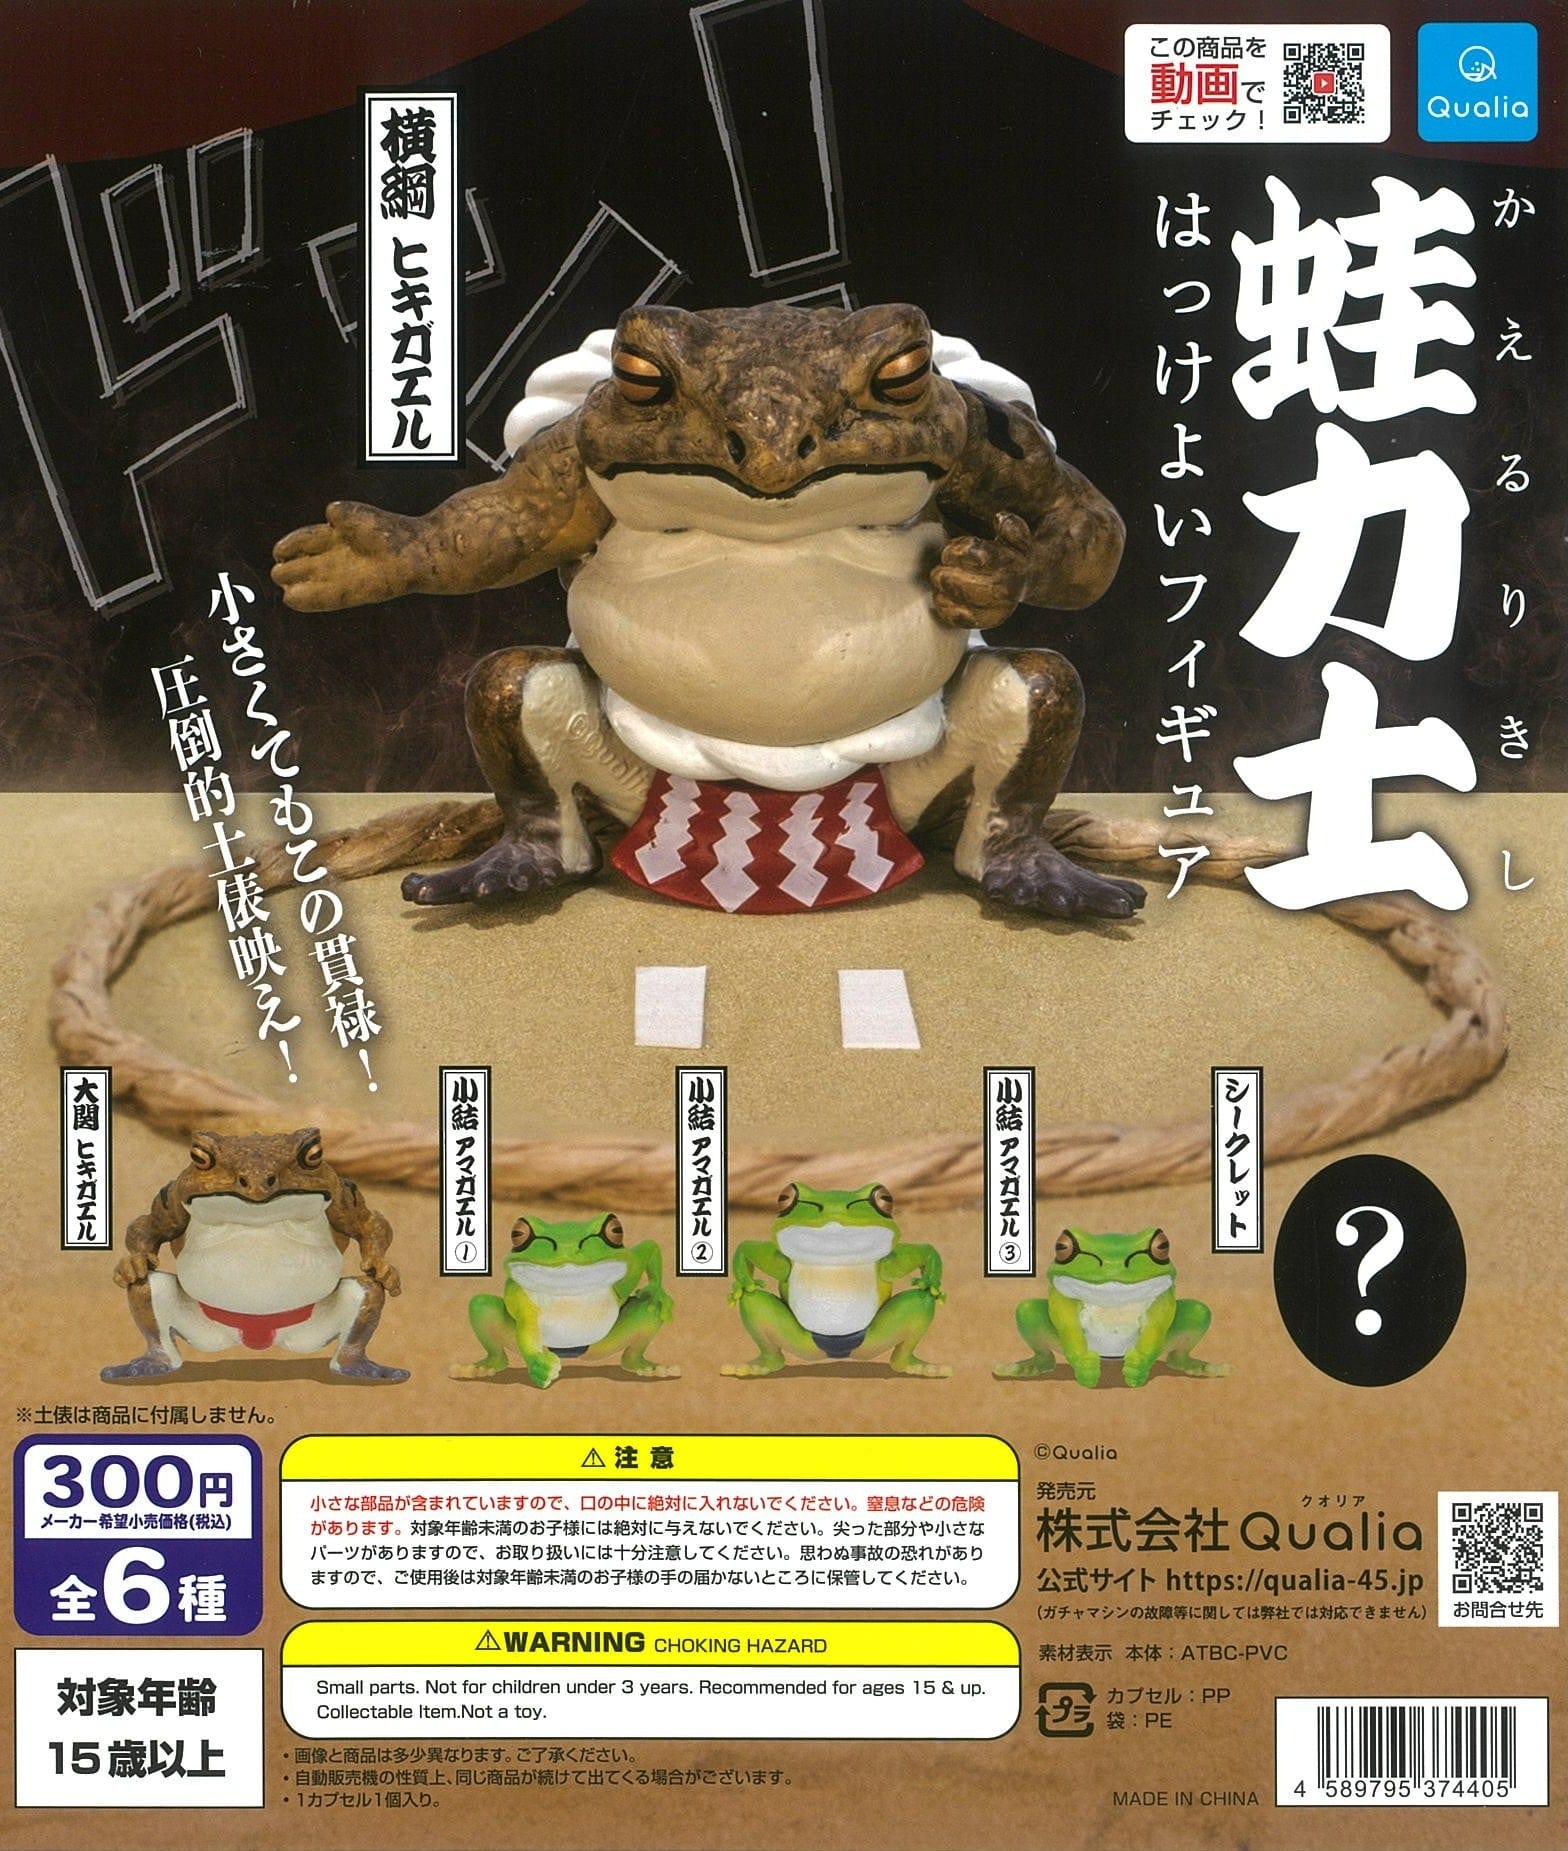 Qualia CP1902 Frog Sumo Wrestler Hakkeyoi Figure